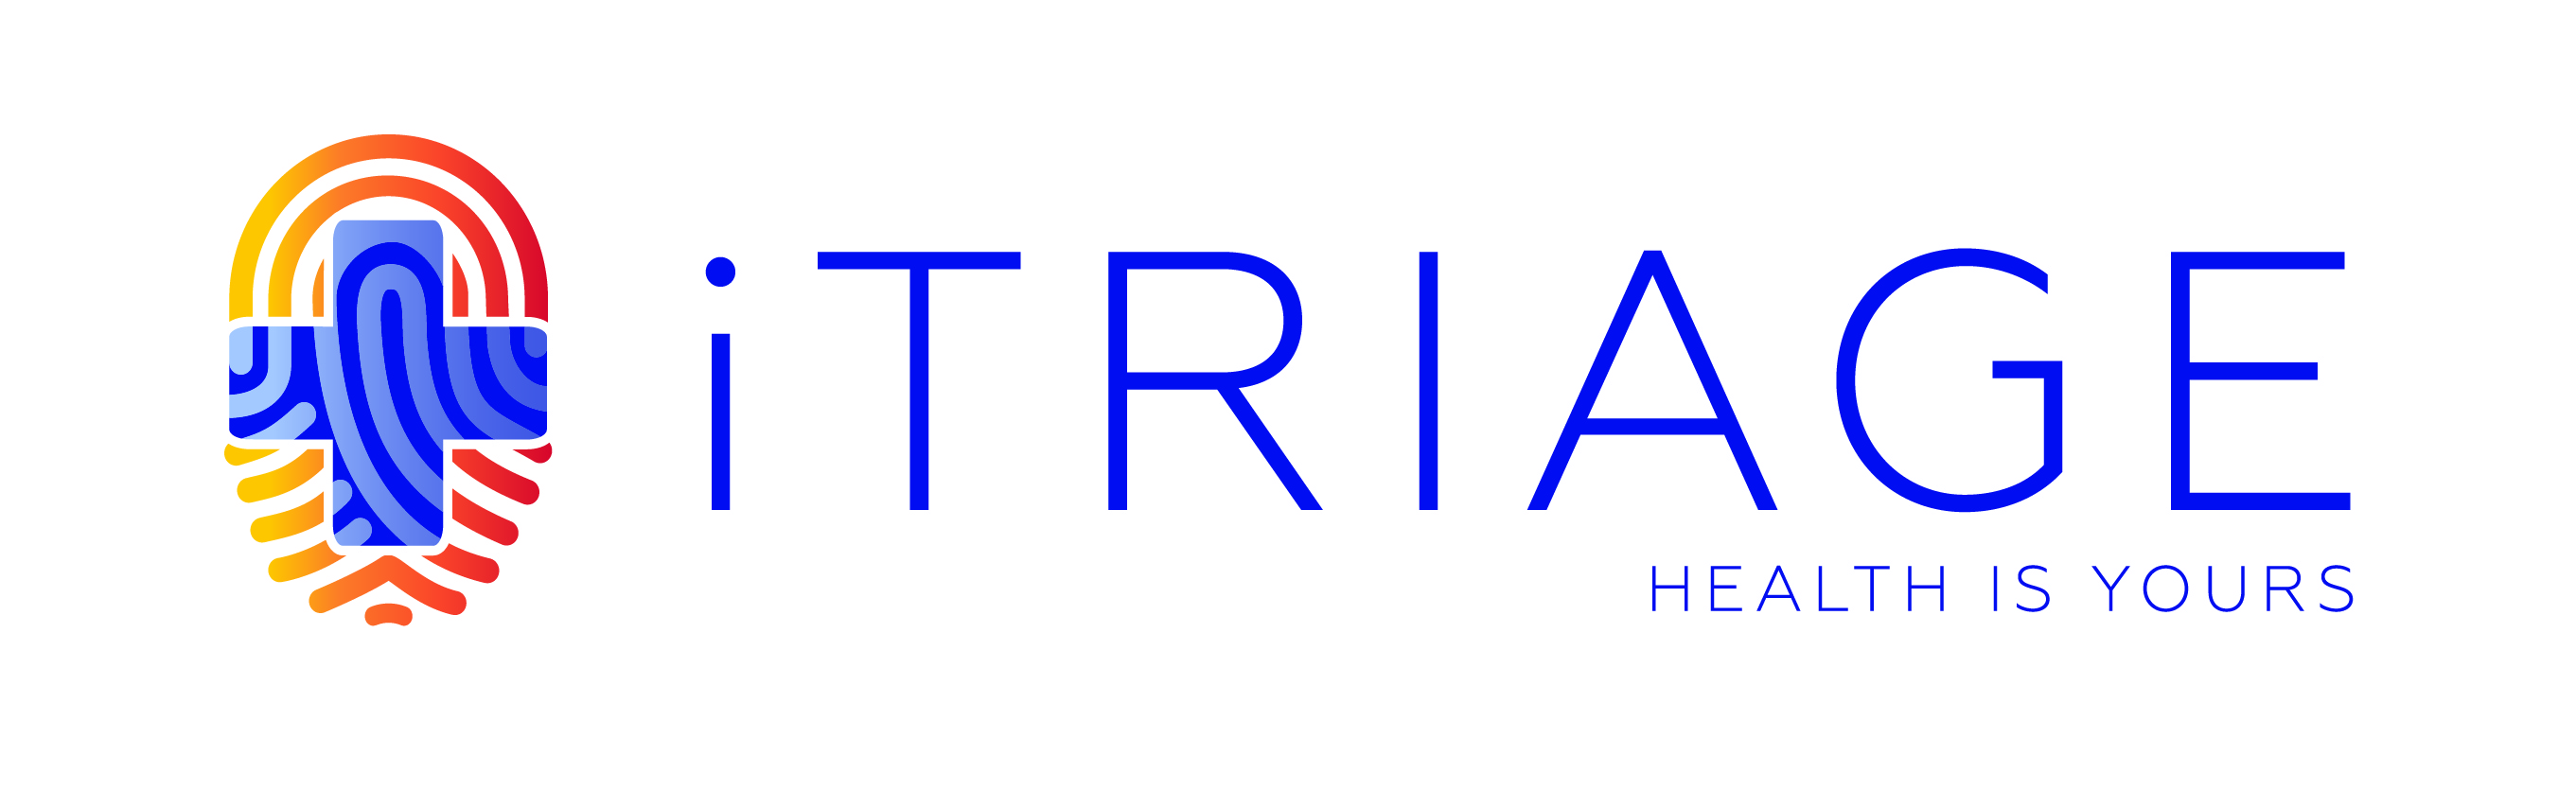 COC 2015 iTriage logo